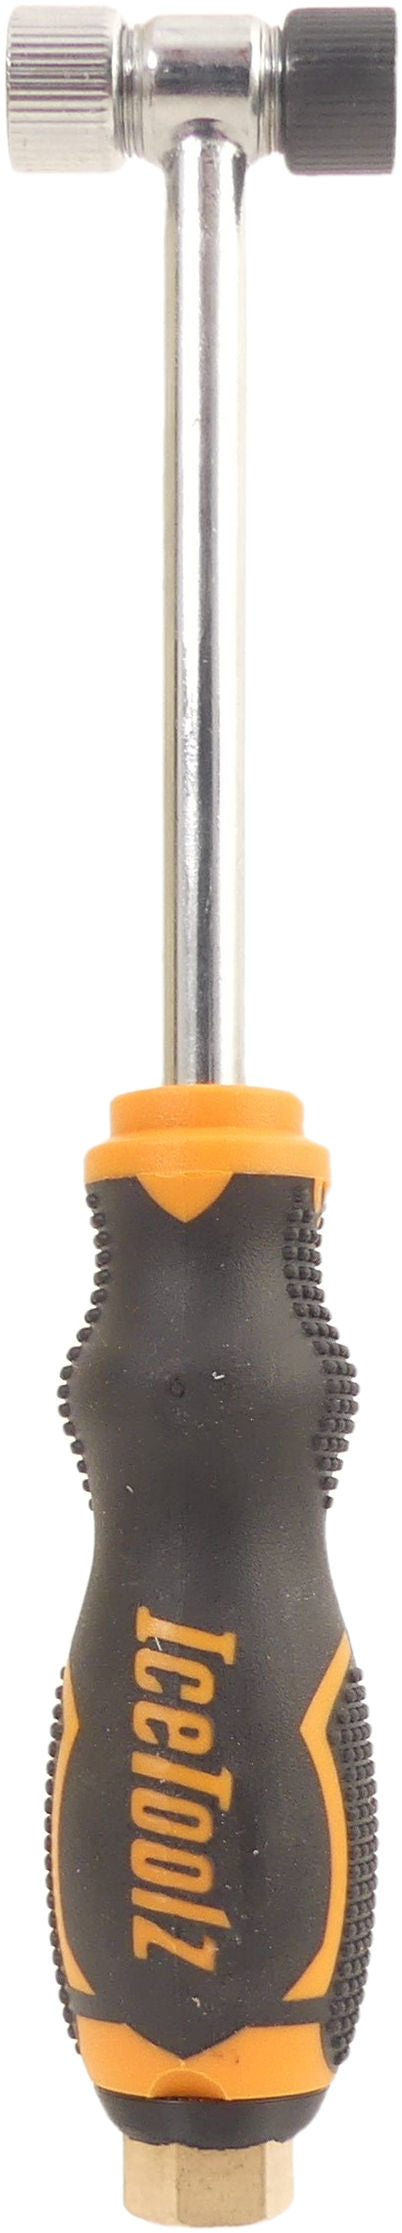 compressor handle 240A91A alu/rubber orange/black